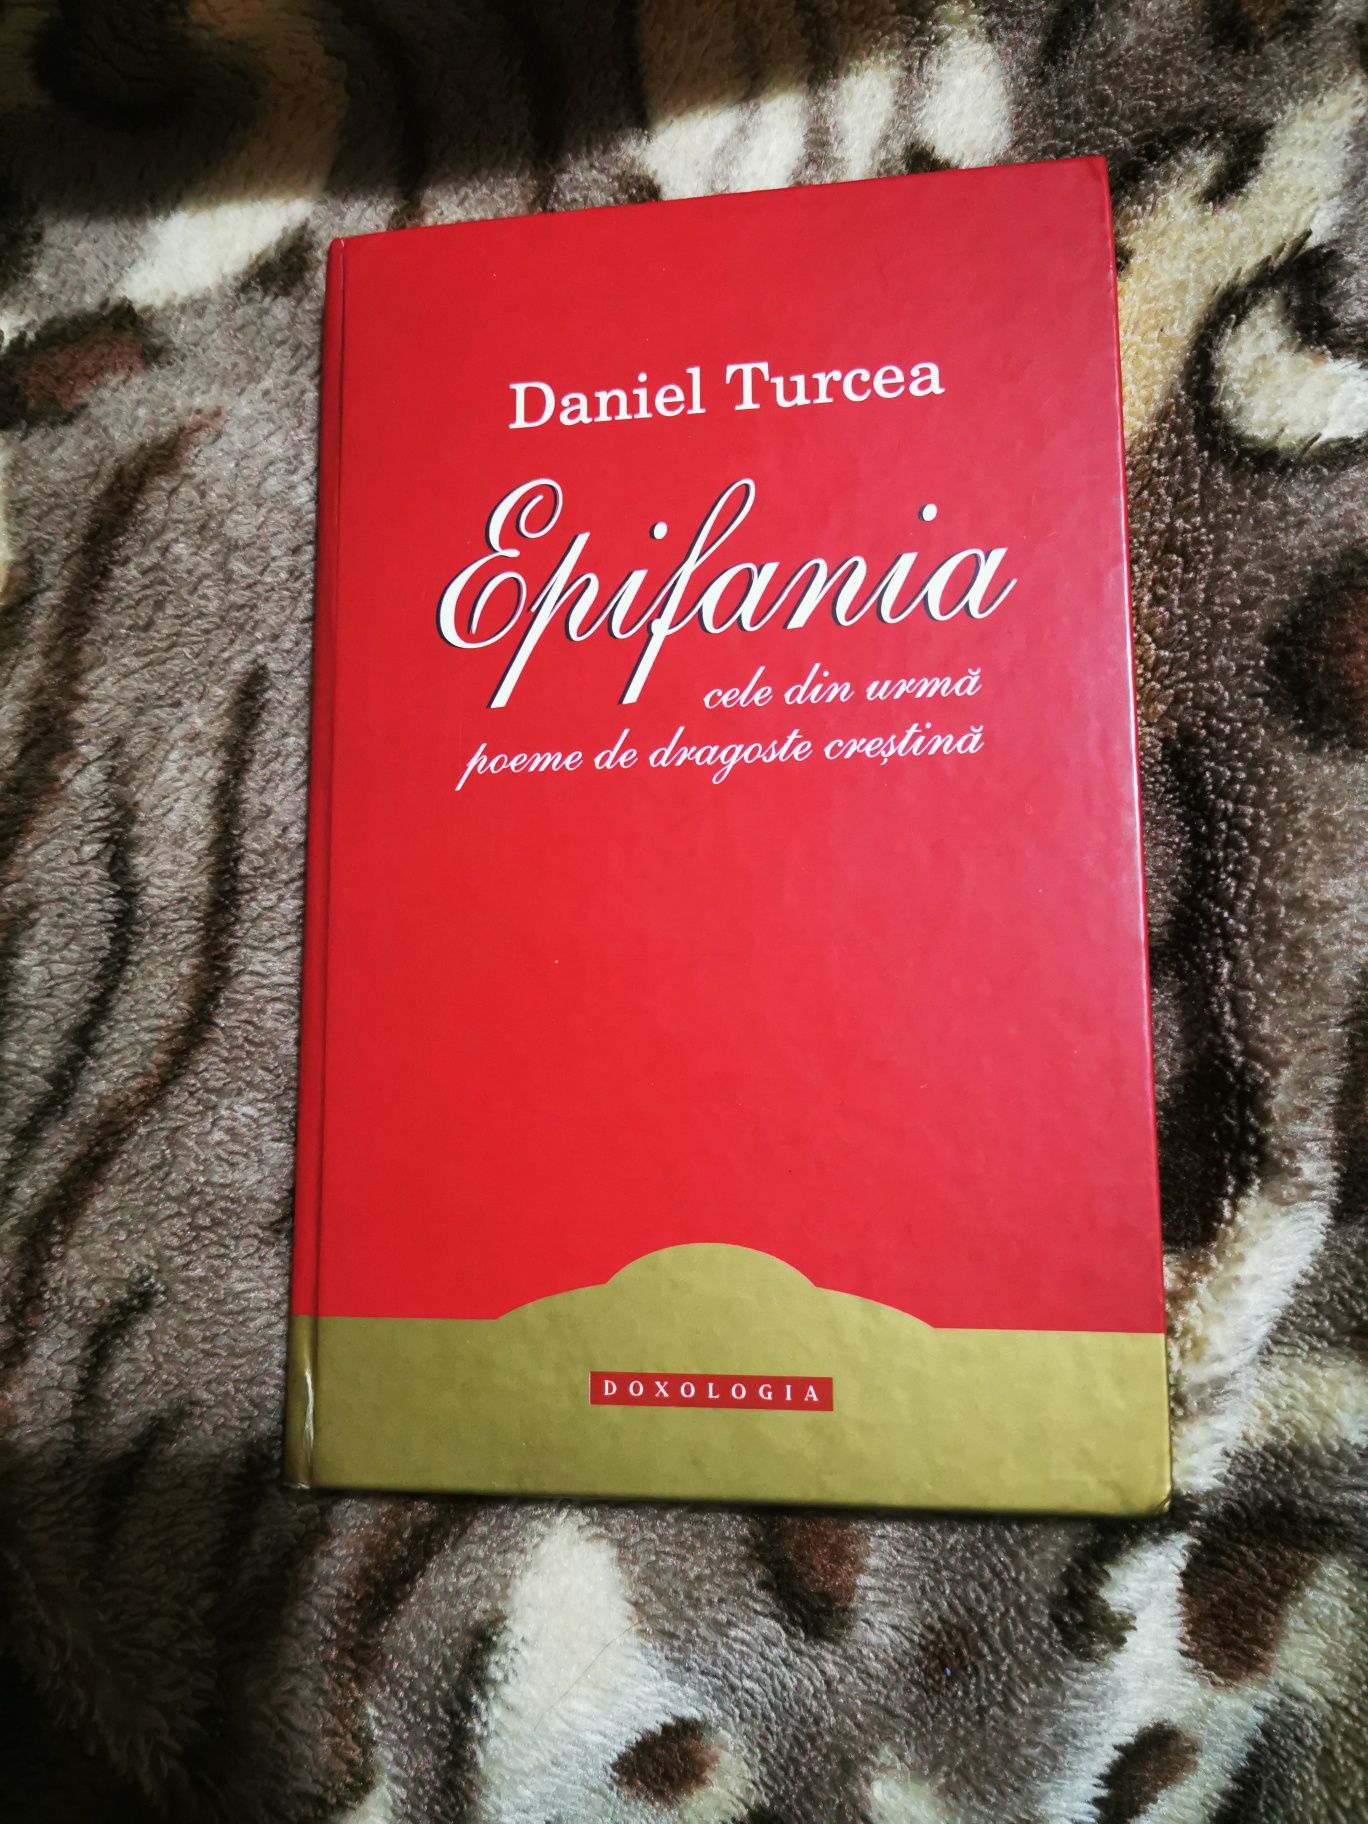 Daniel Turcea Epifania PRINCEPS, UNIC, poezii de dragoste crestina